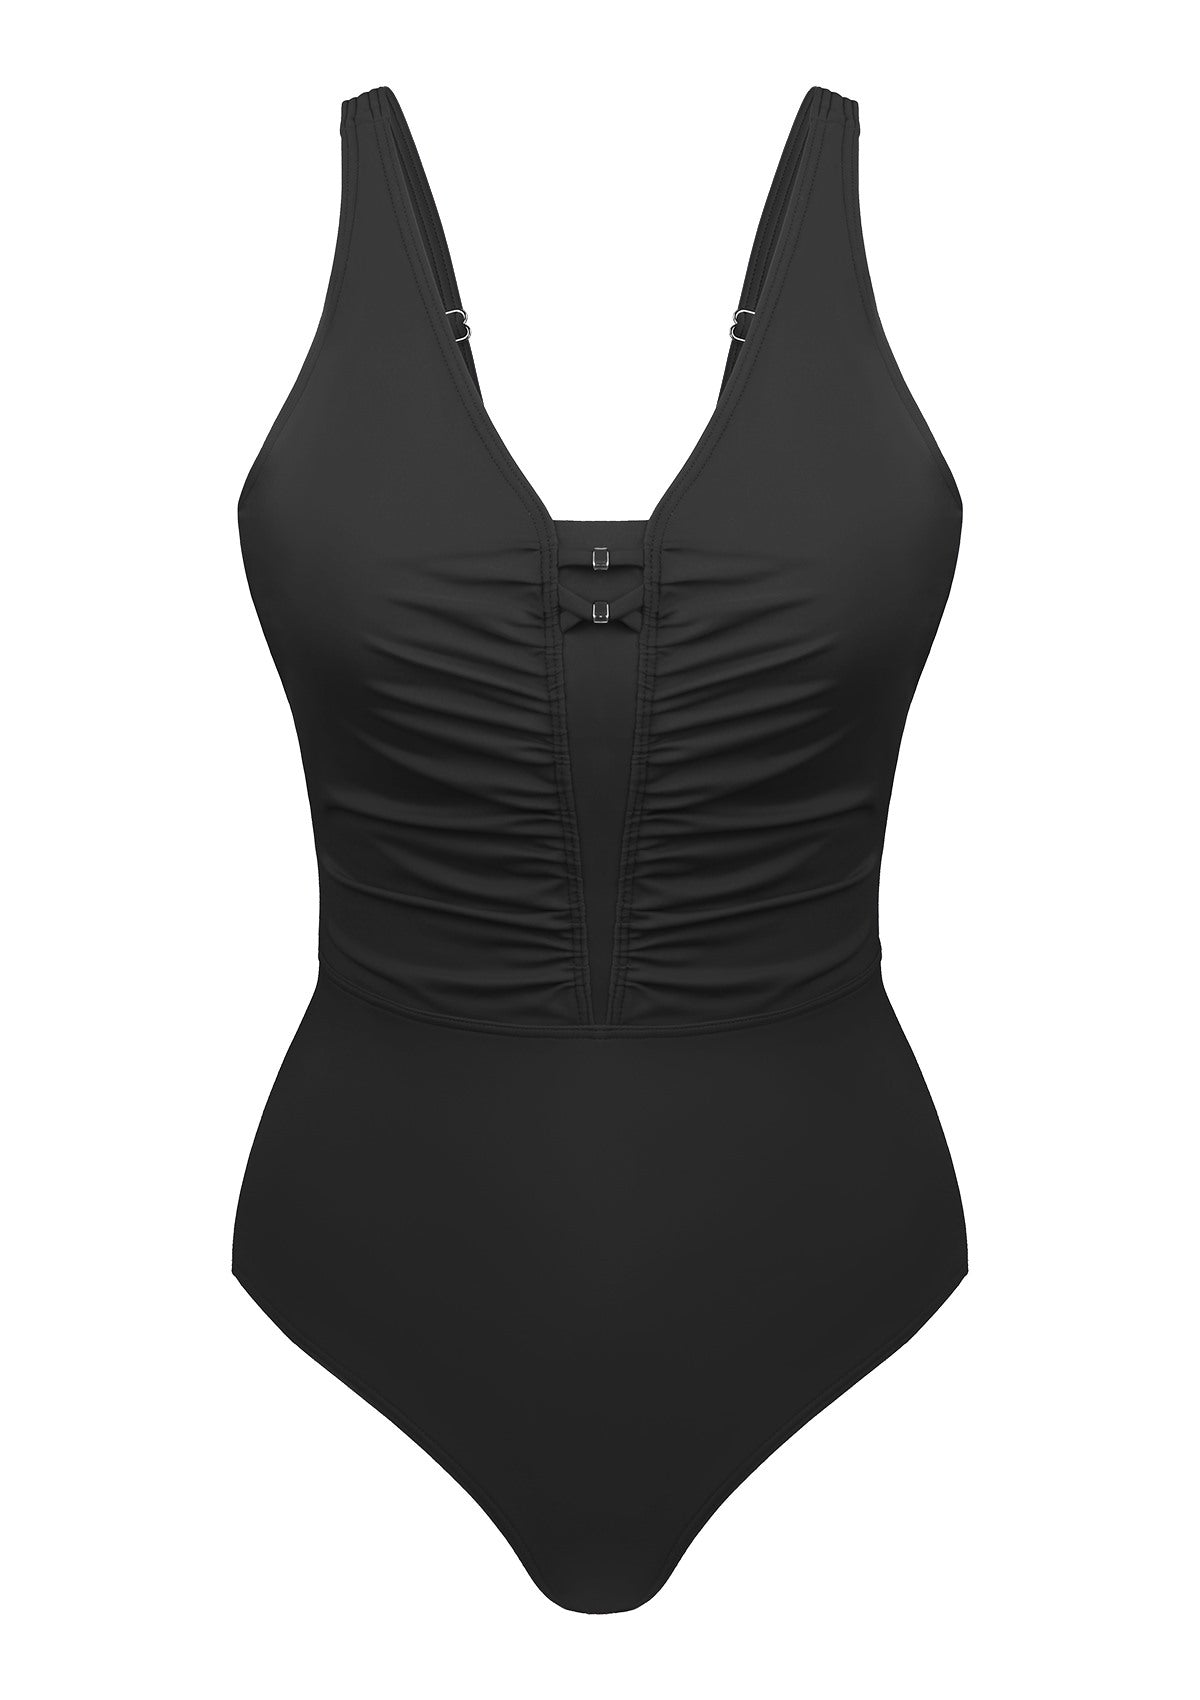 V-Neck Shirred One-Piece Swimwear - Aqua Breeze / L